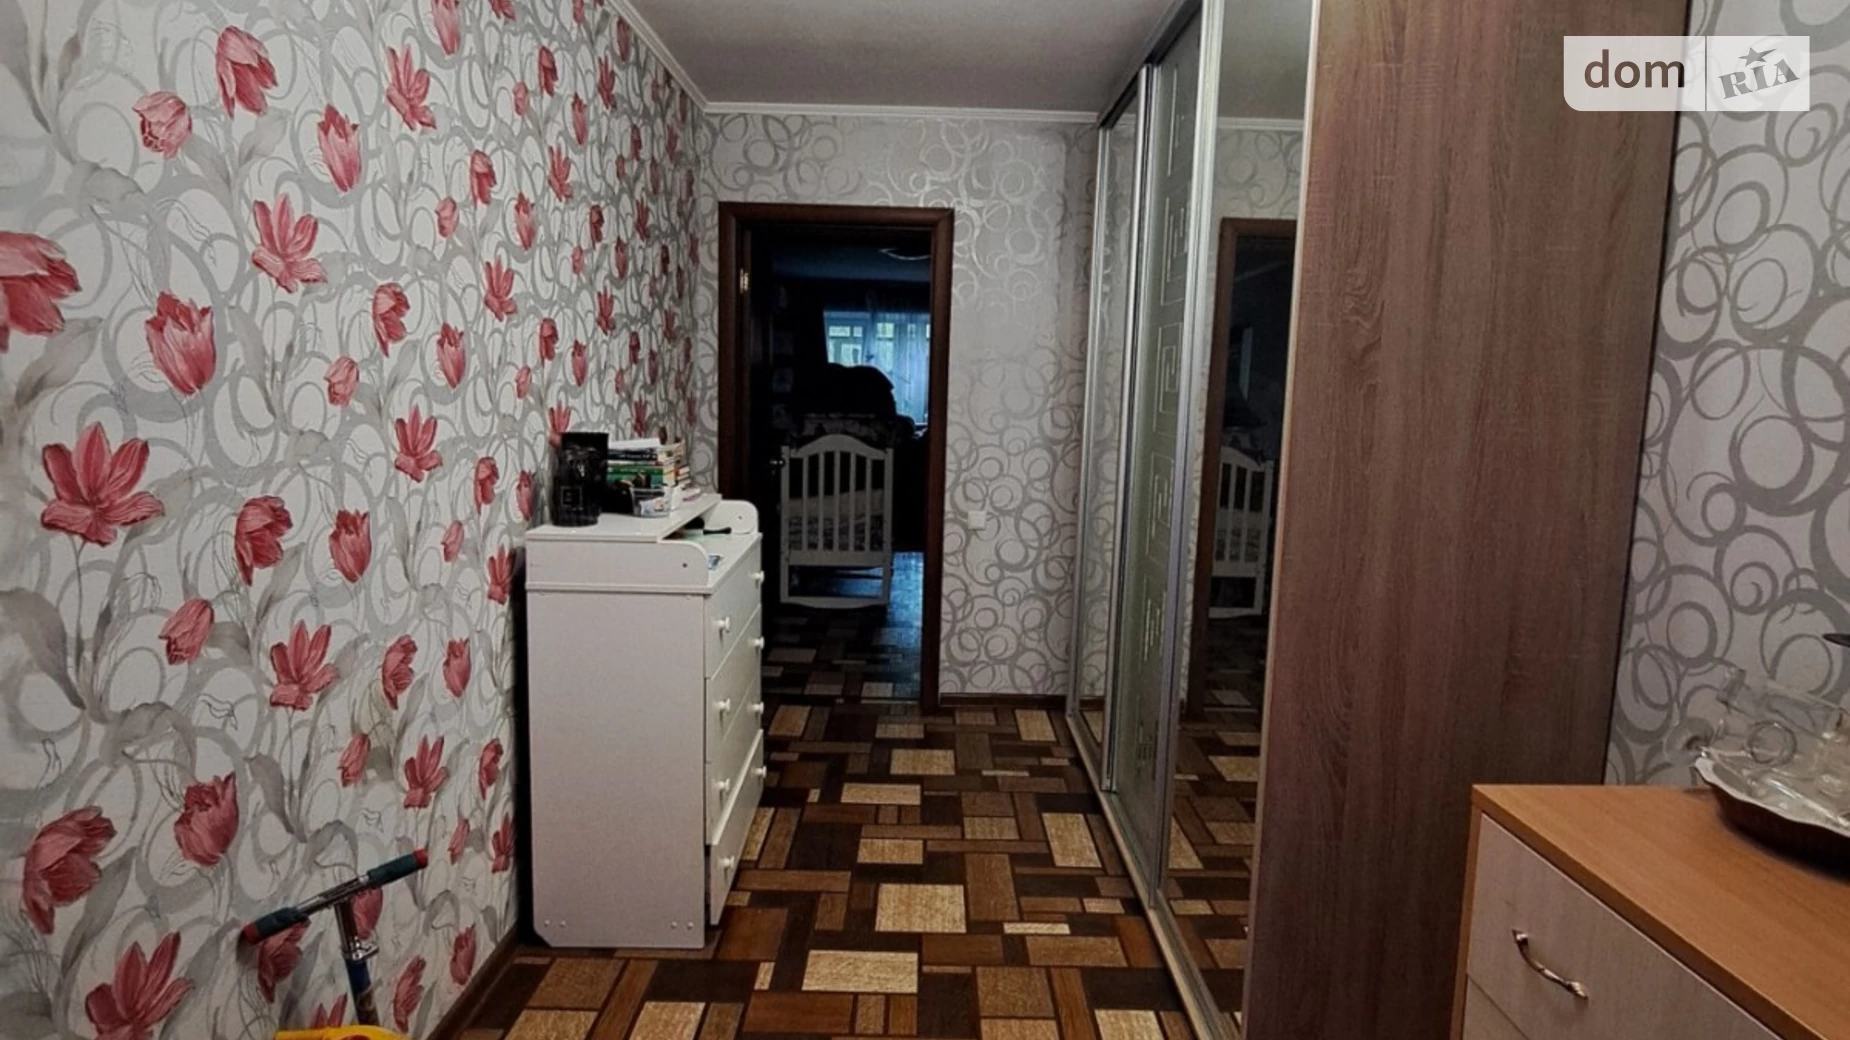 2-кімнатна квартира 43.09 кв. м у Запоріжжі, вул. Алмазна